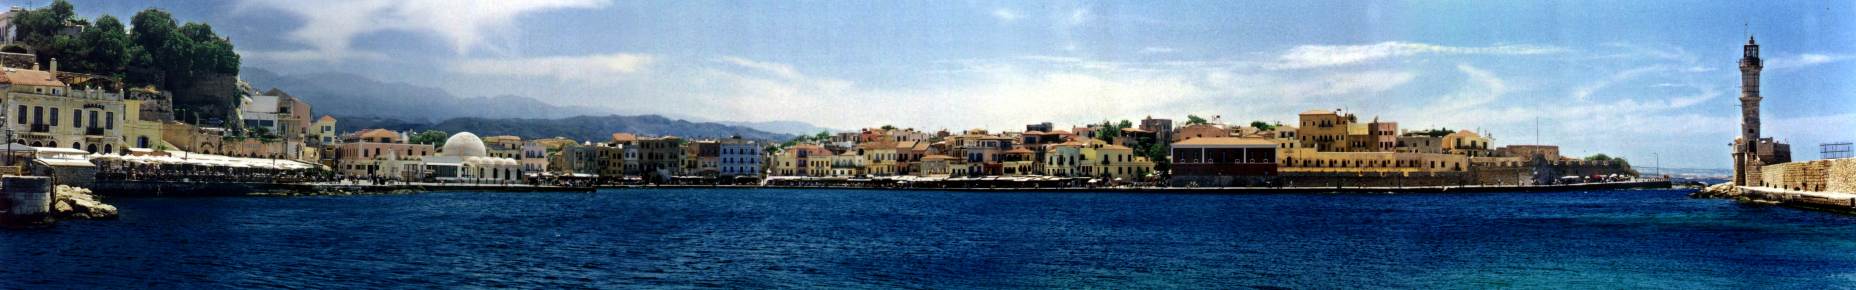 Hania, Crete, 2000